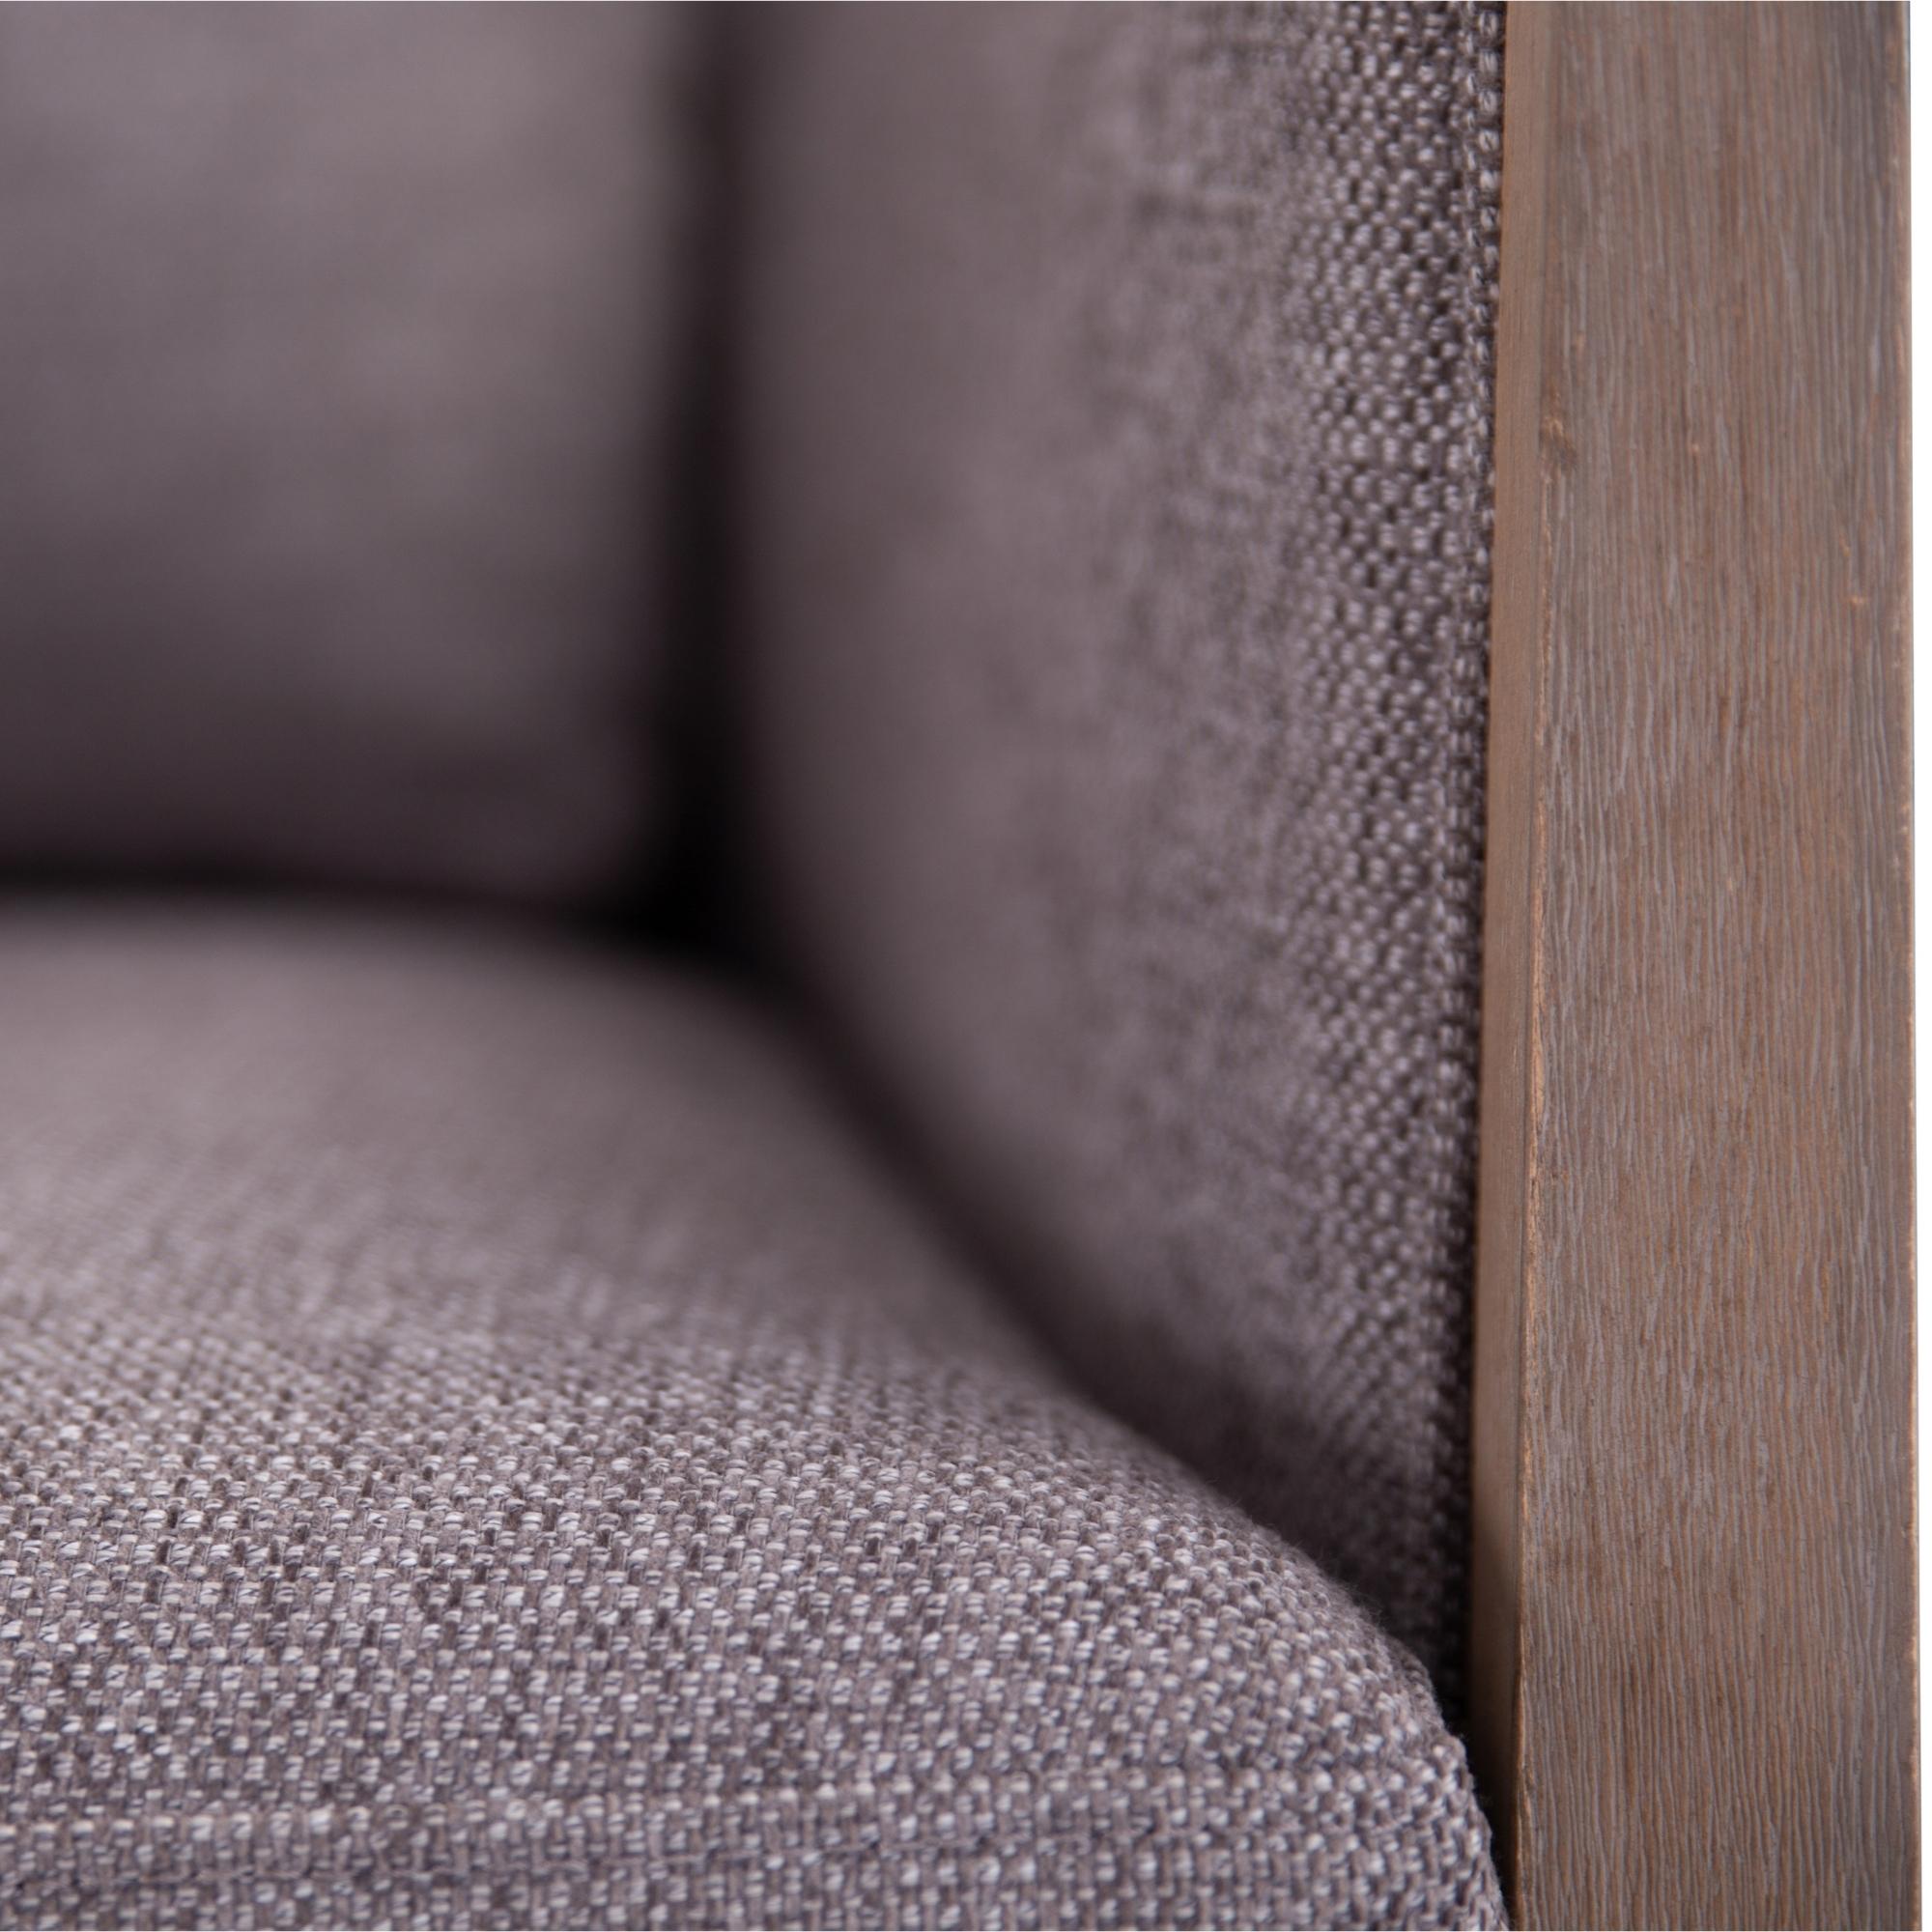 Moonlight Pine Fabric Club Armchair Executive Sofa Tub Chair - Grey.